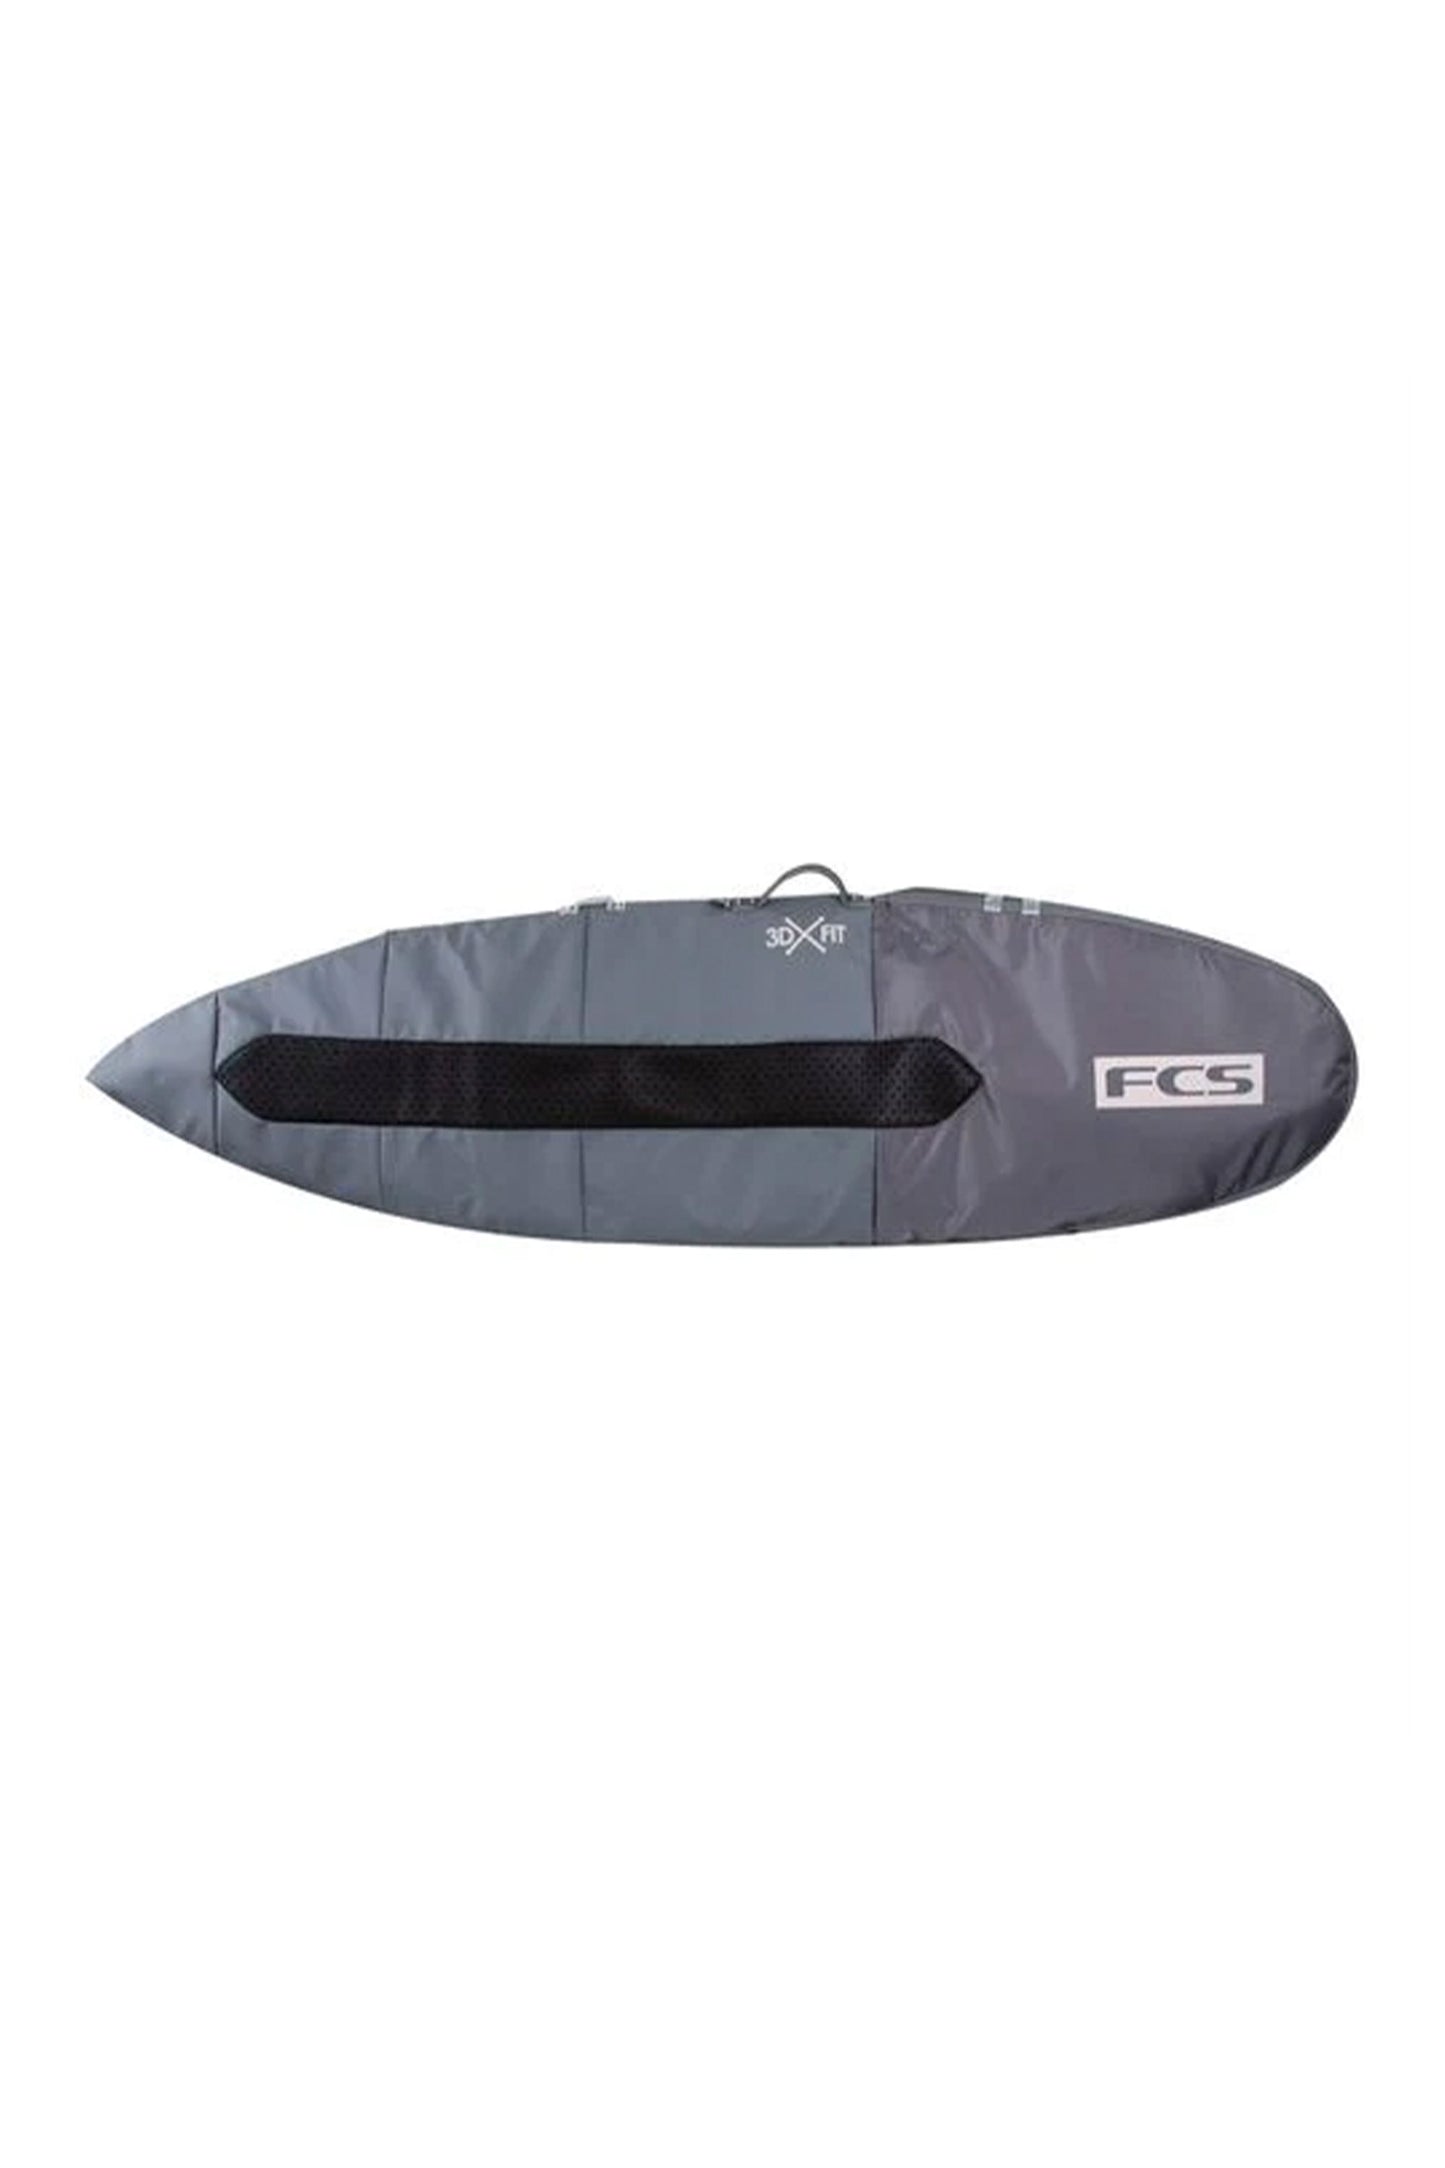 
                  
                       Pukas-Surf-Shop-FCS-Boardbags-Day-all-purpose
                  
                